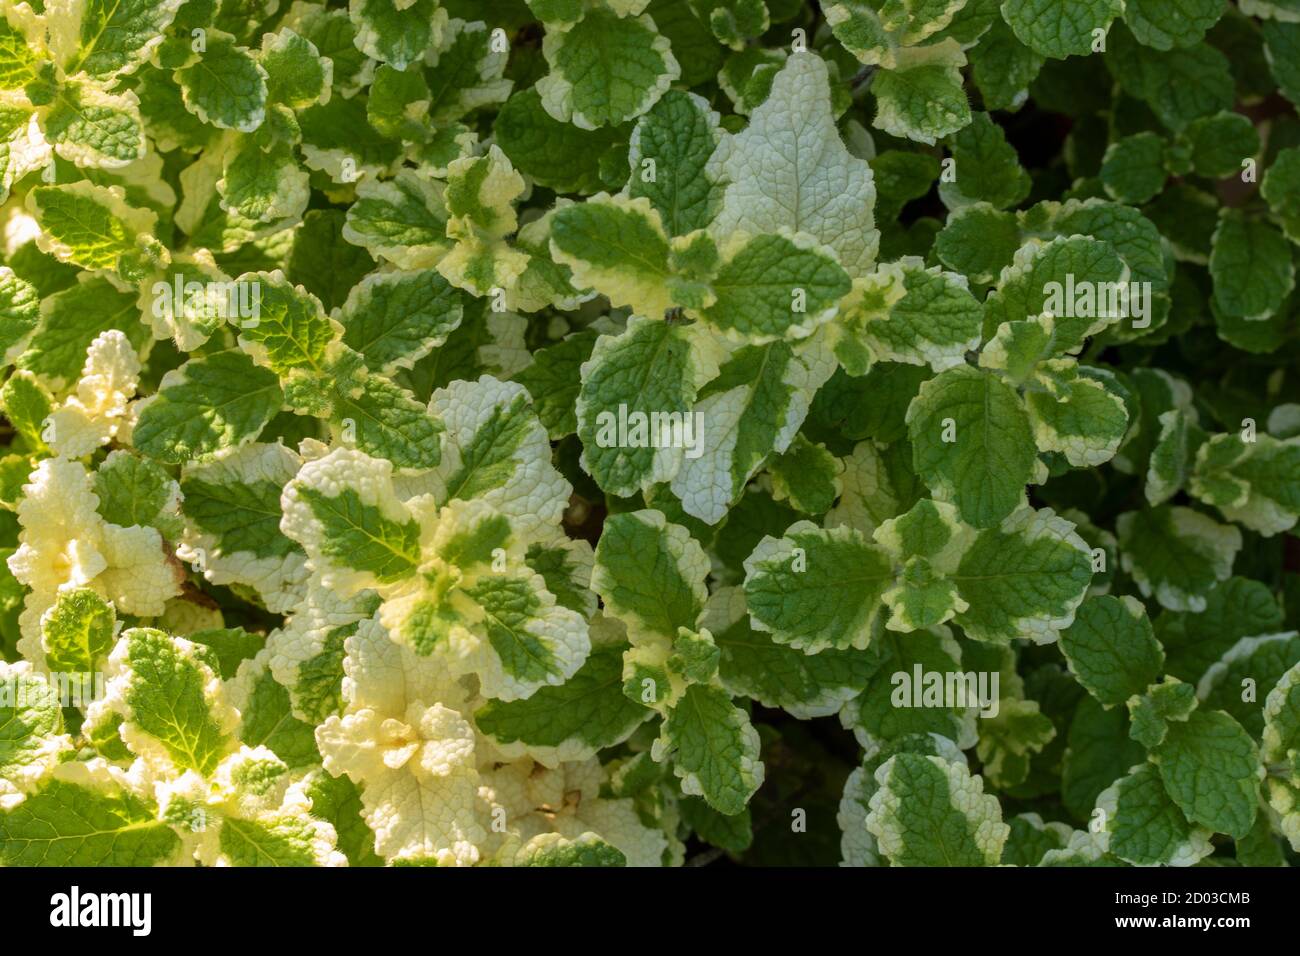 Pineapple Mint (Mentha suaveolens 'Variegata') foliage, herb plant Stock Photo